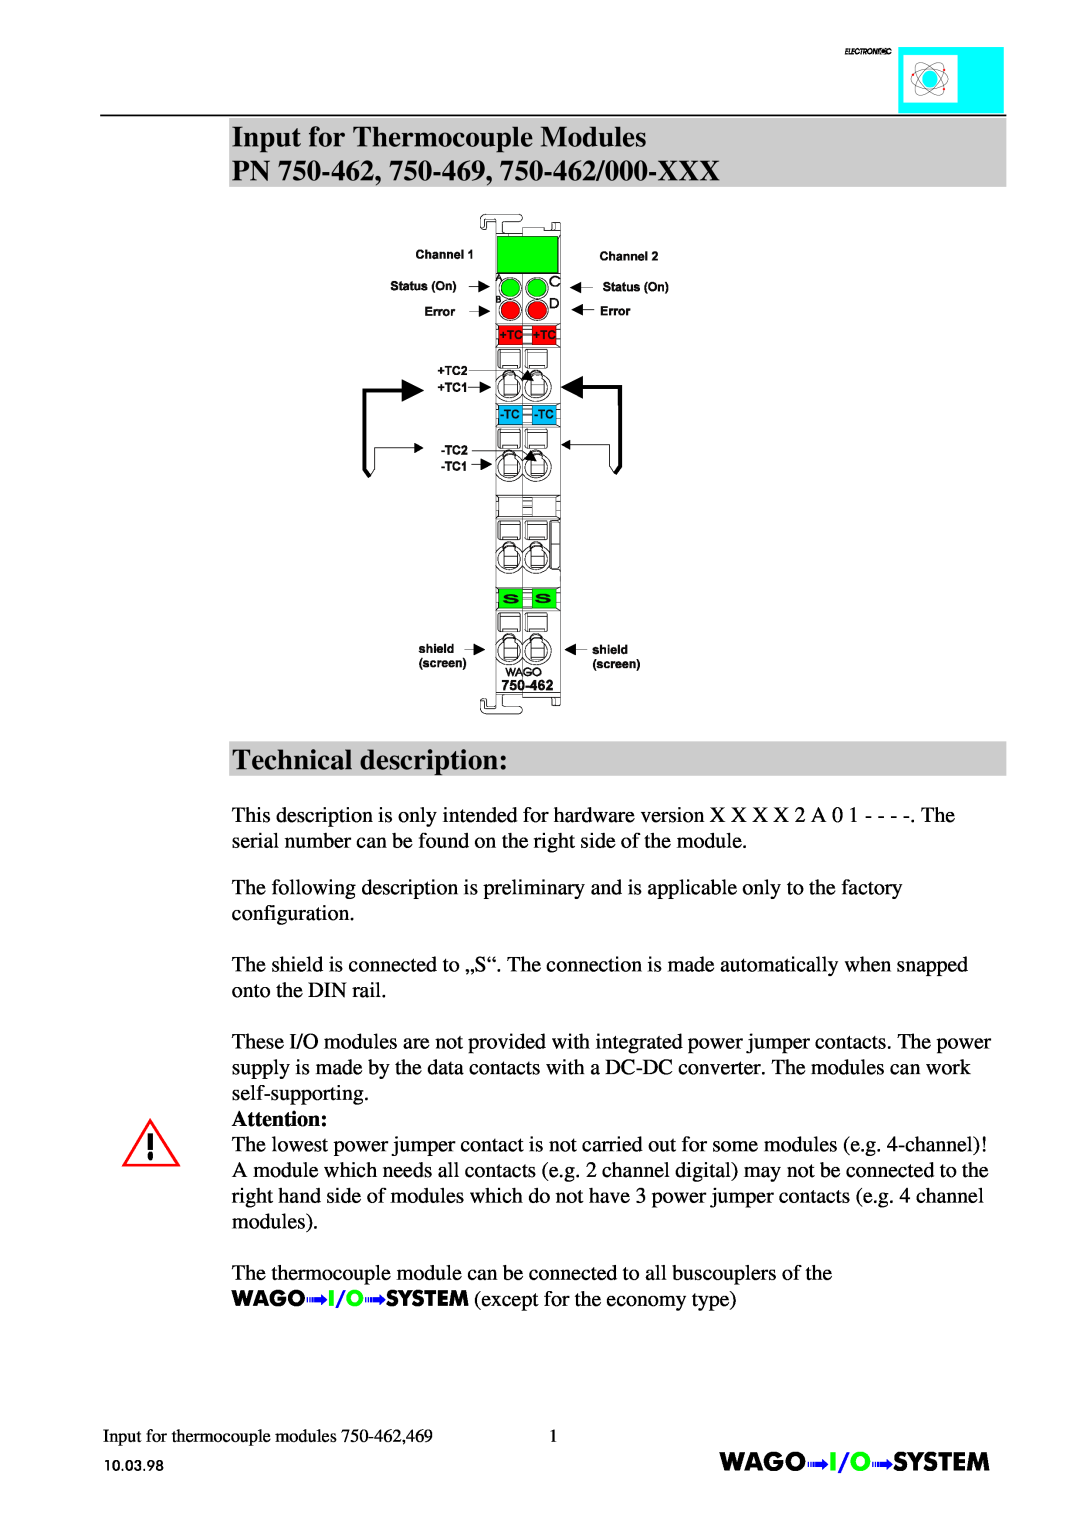 Quatech INTERBUS S manual Input for Thermocouple Modules PN 750-462, 750-469, 750-462/000-XXX, Technical description 